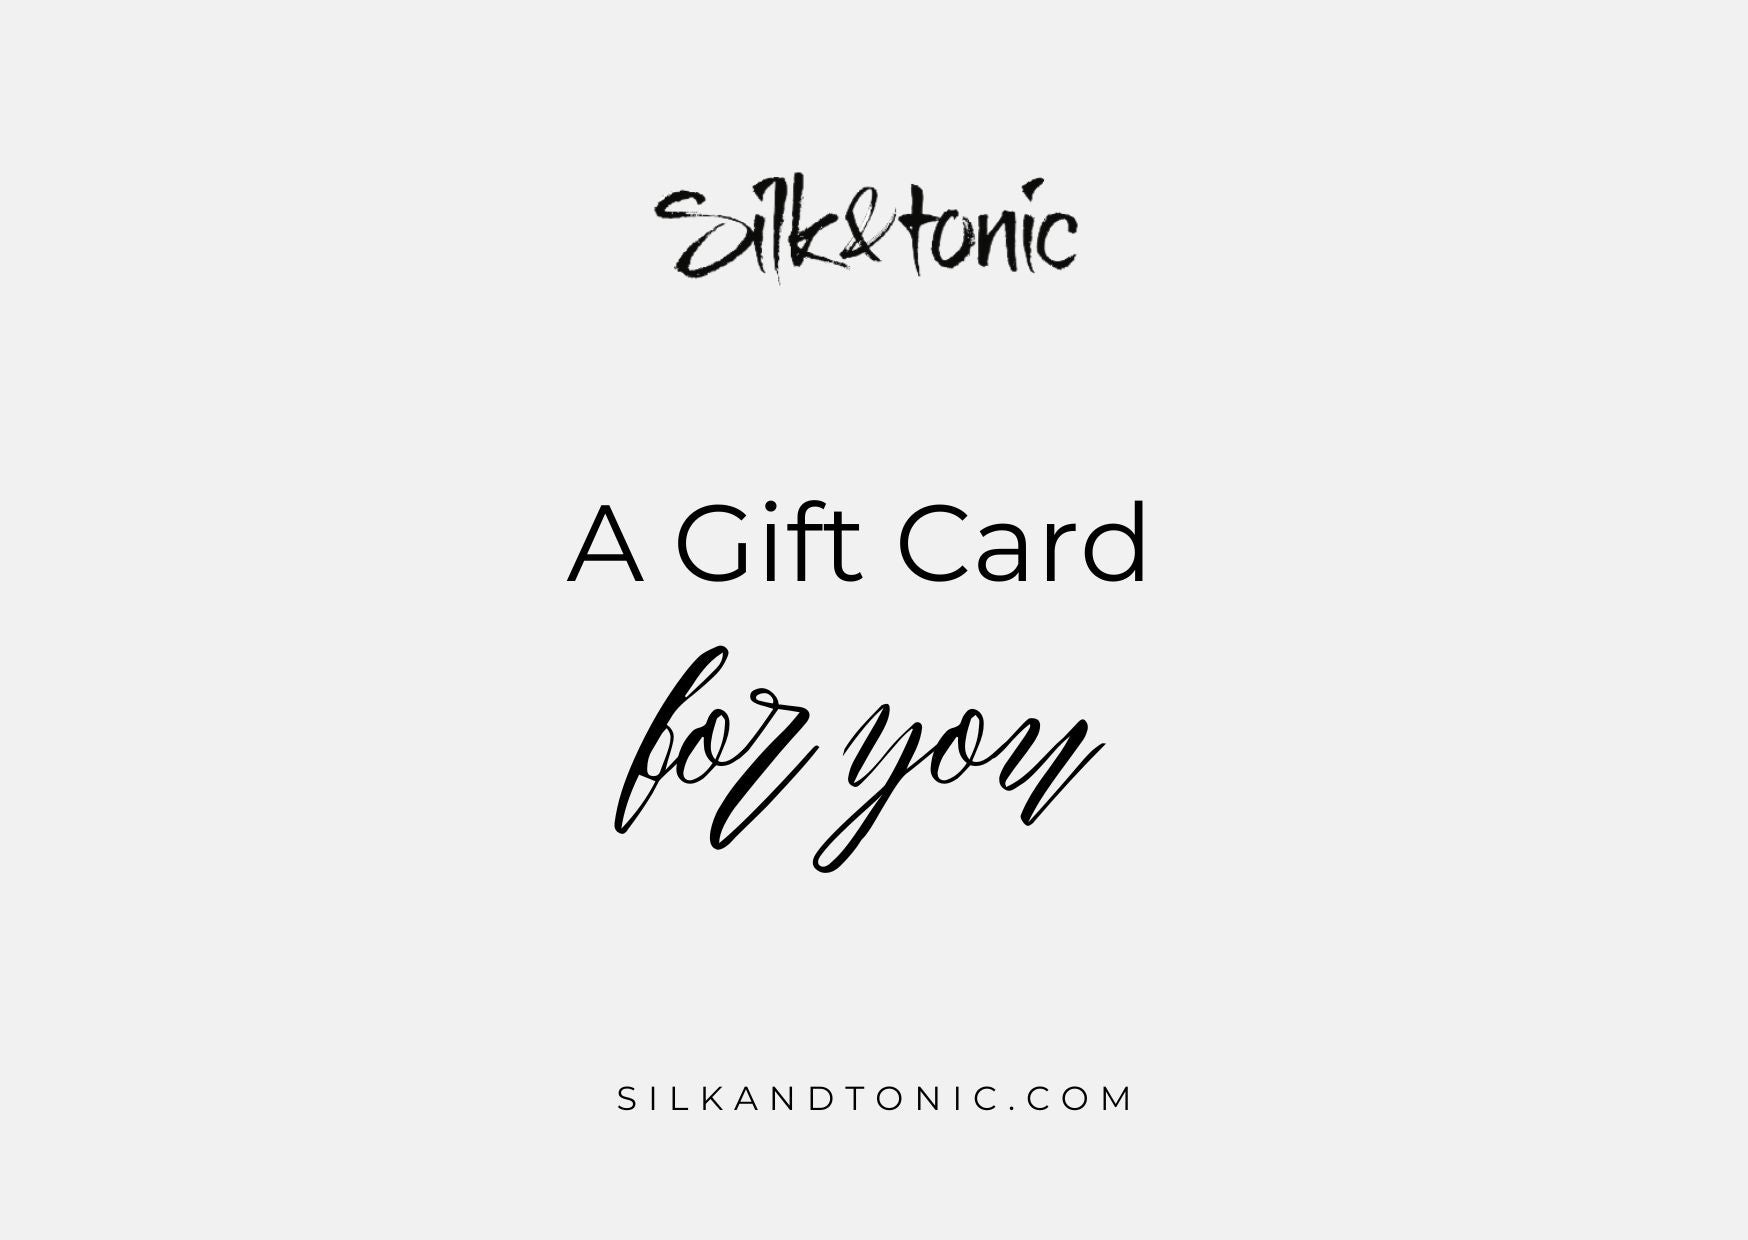 Gift-Card-Present-Idea-Silk & tonic